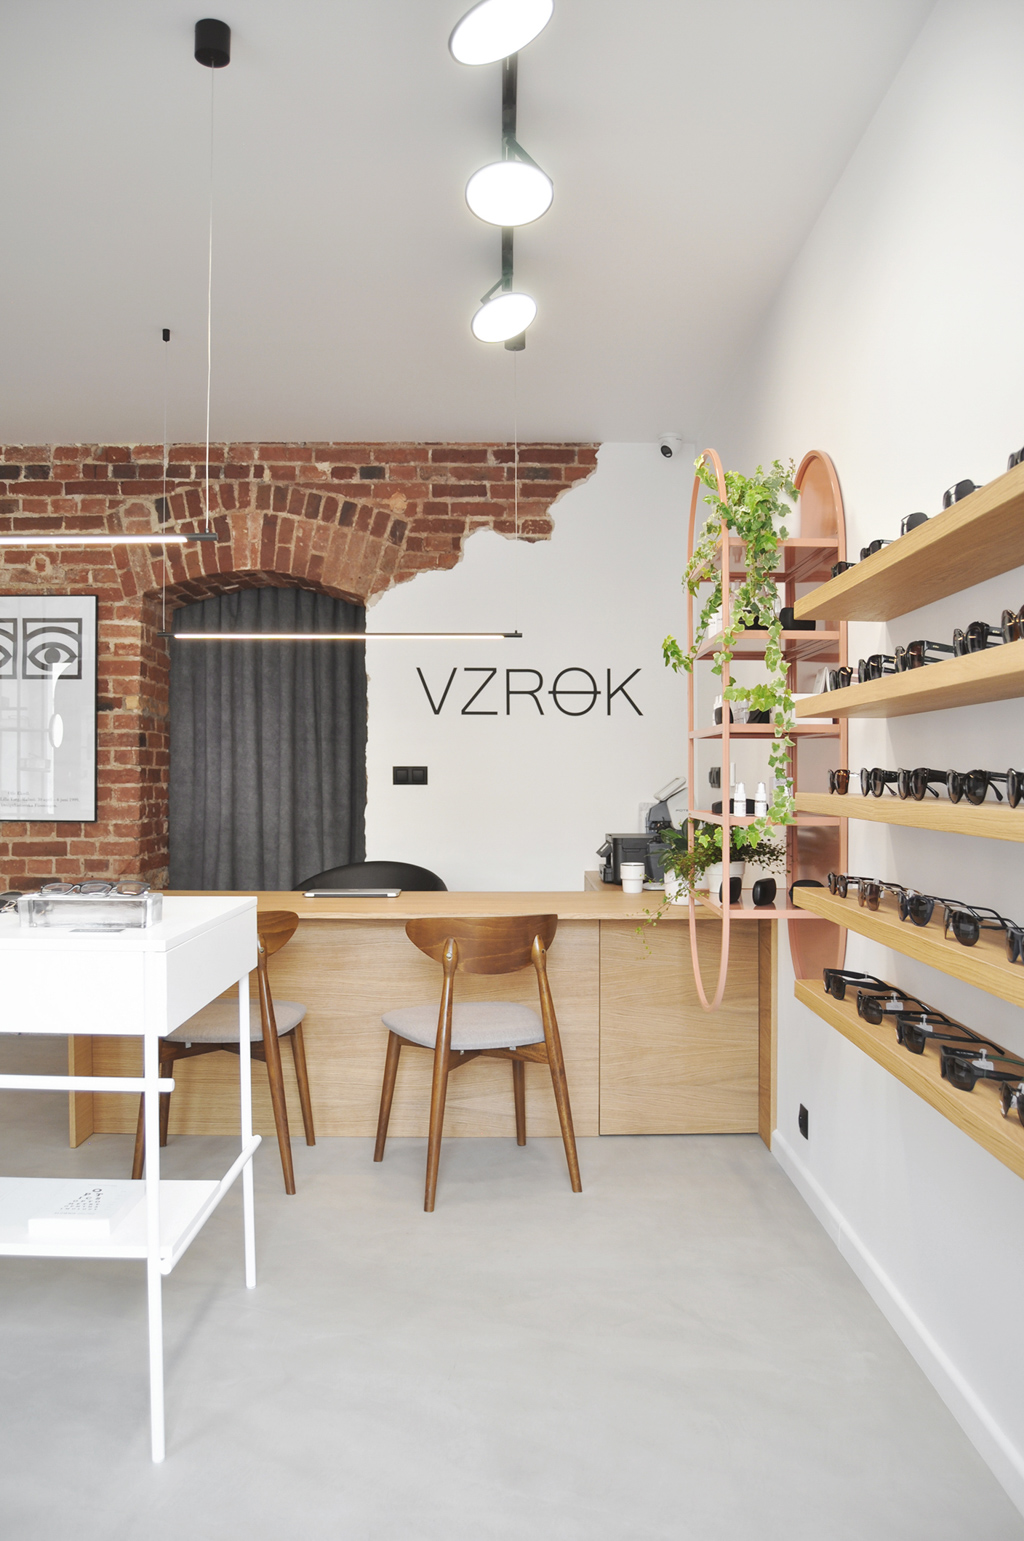 Microcement floor in the Vzrok optician’s shop